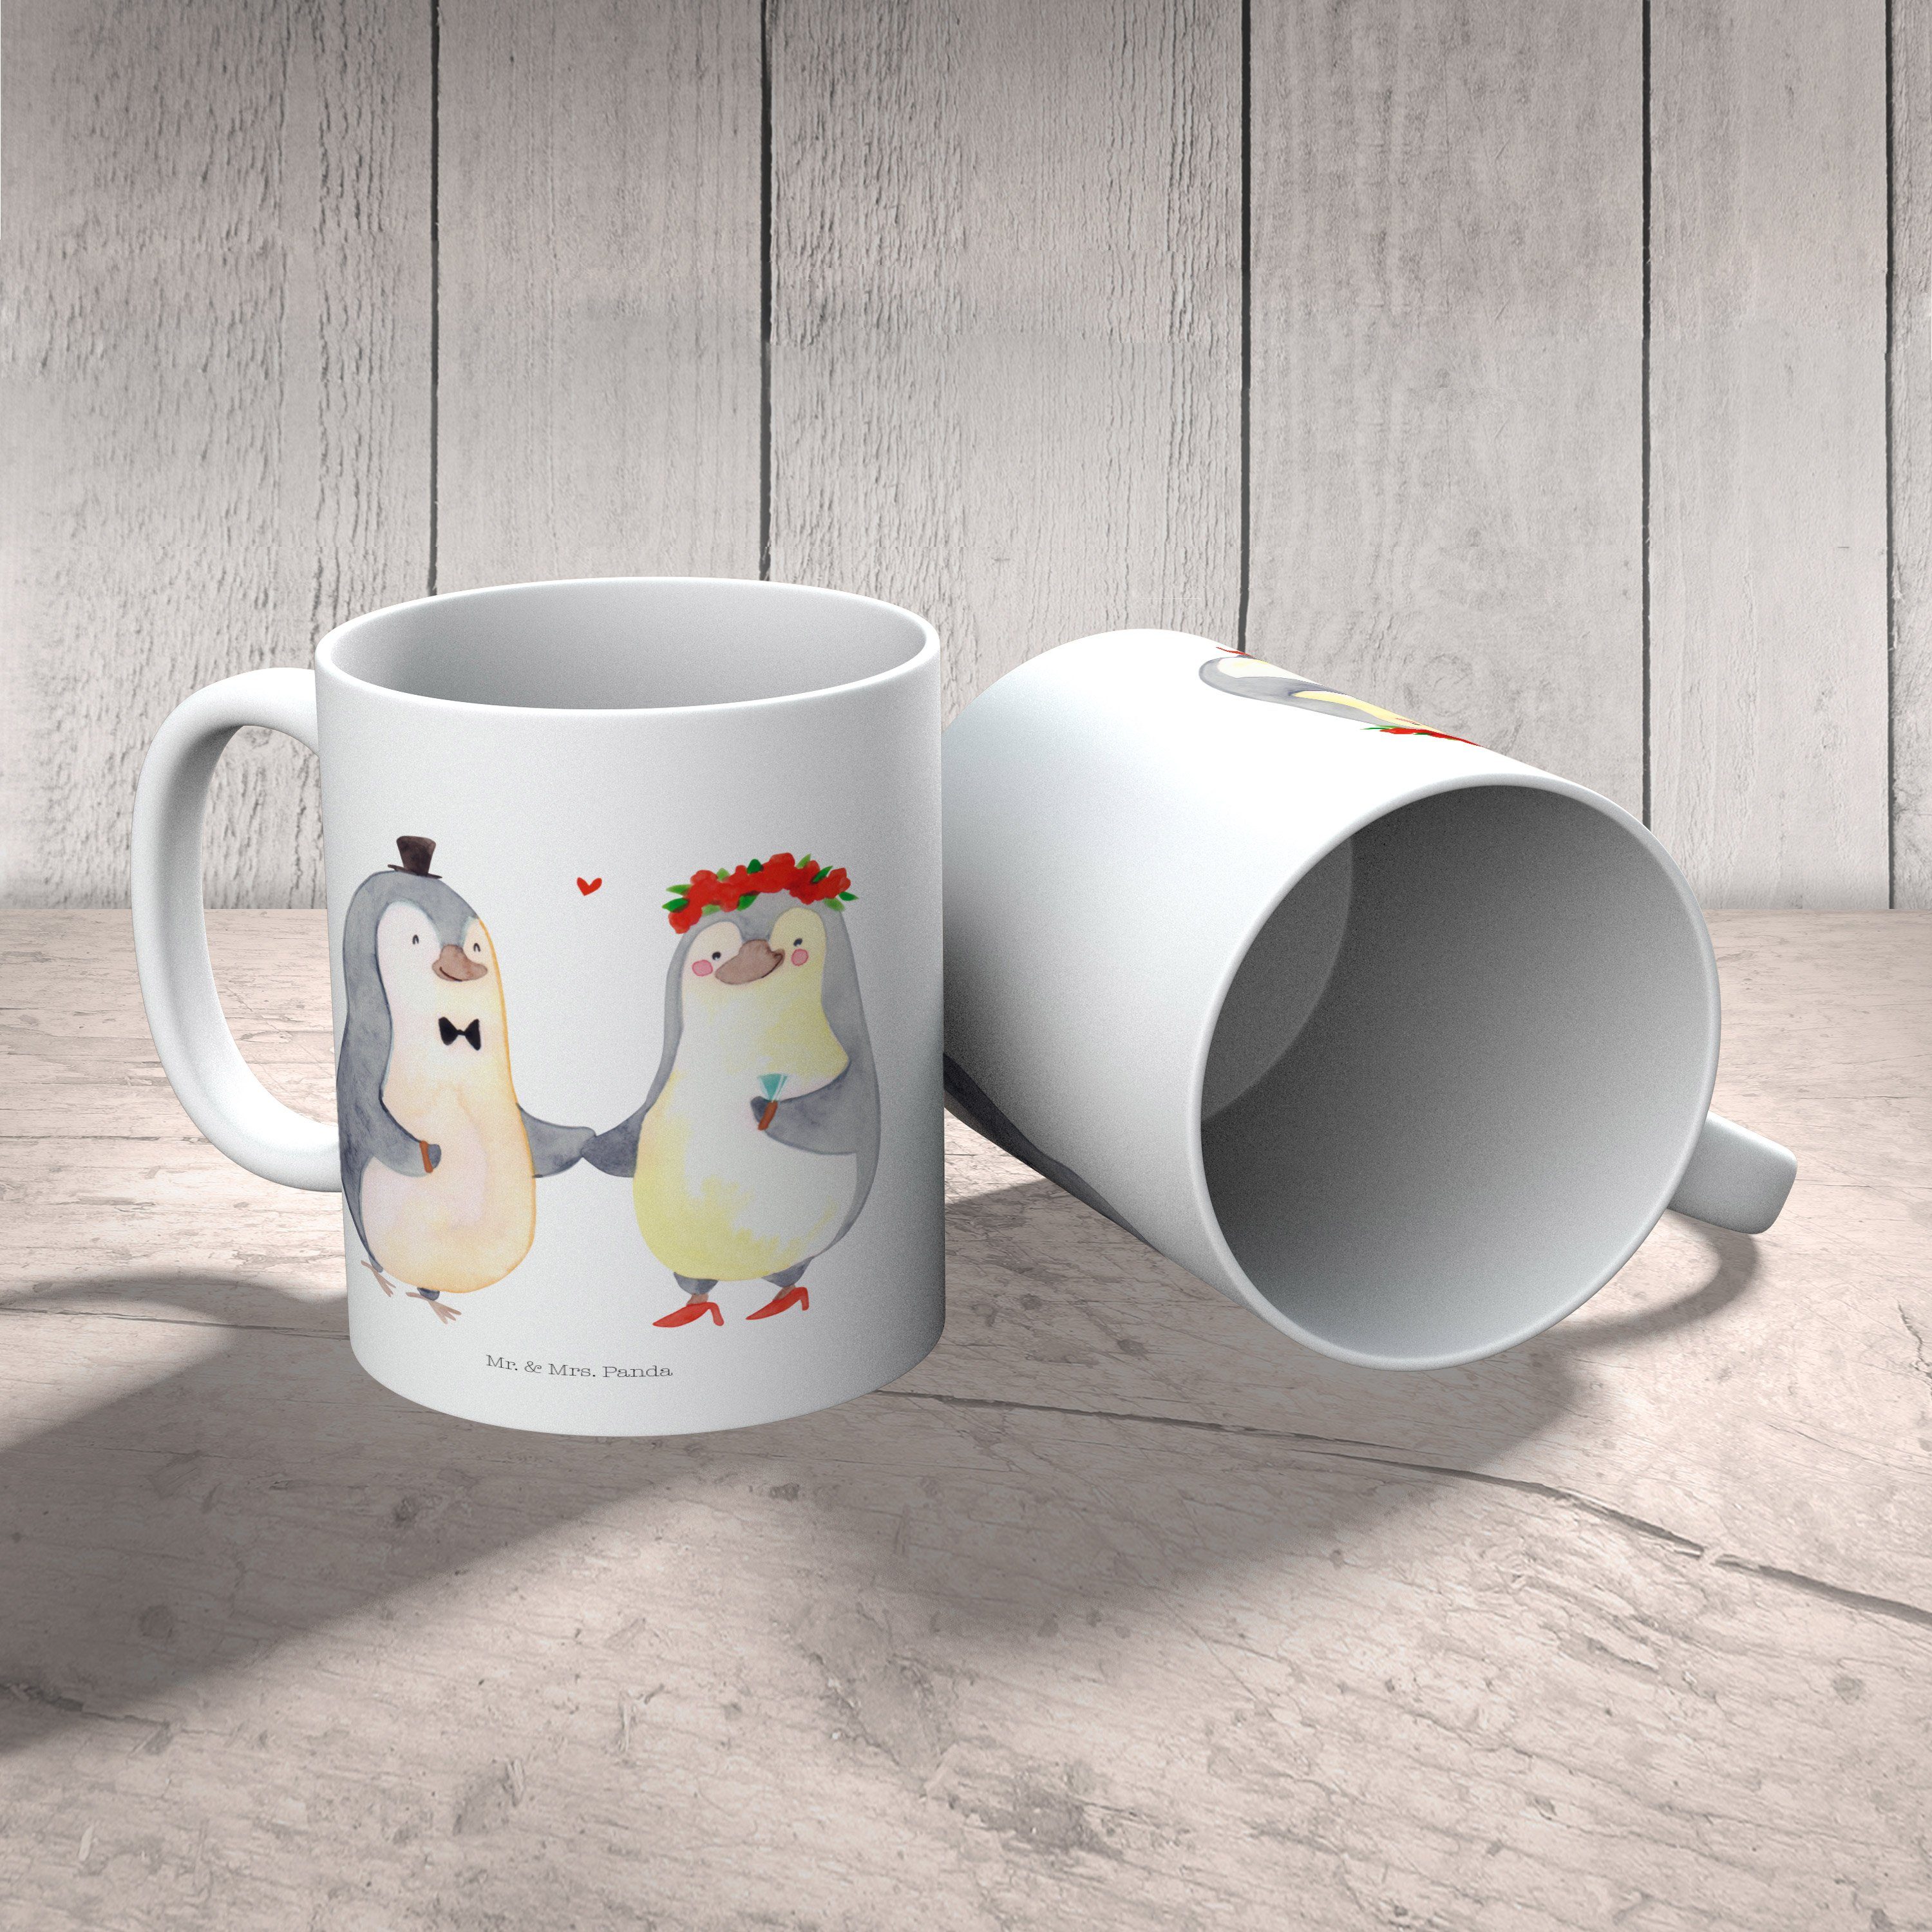 Panda Geschenk, Mr. Büro Paar, - Weiß Tas, Pinguin Tasse Mrs. - Kaffeebecher, Tasse, Keramik & Heirat